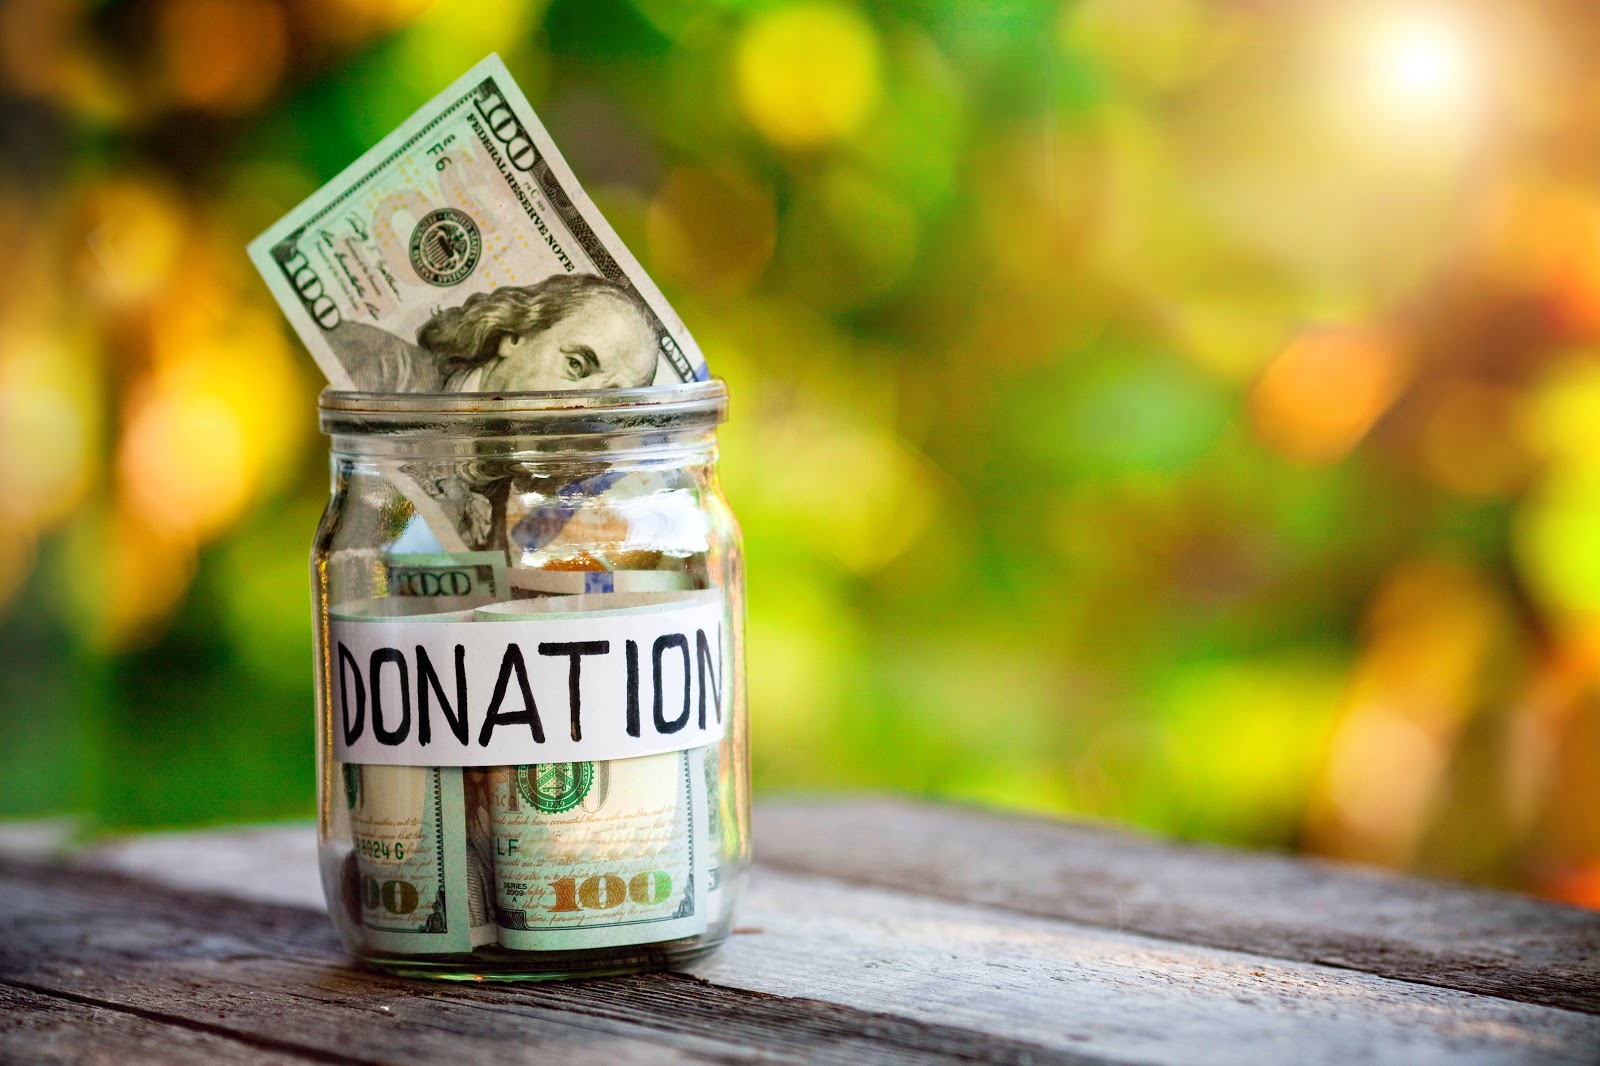 donation receipt: A jar of donation money